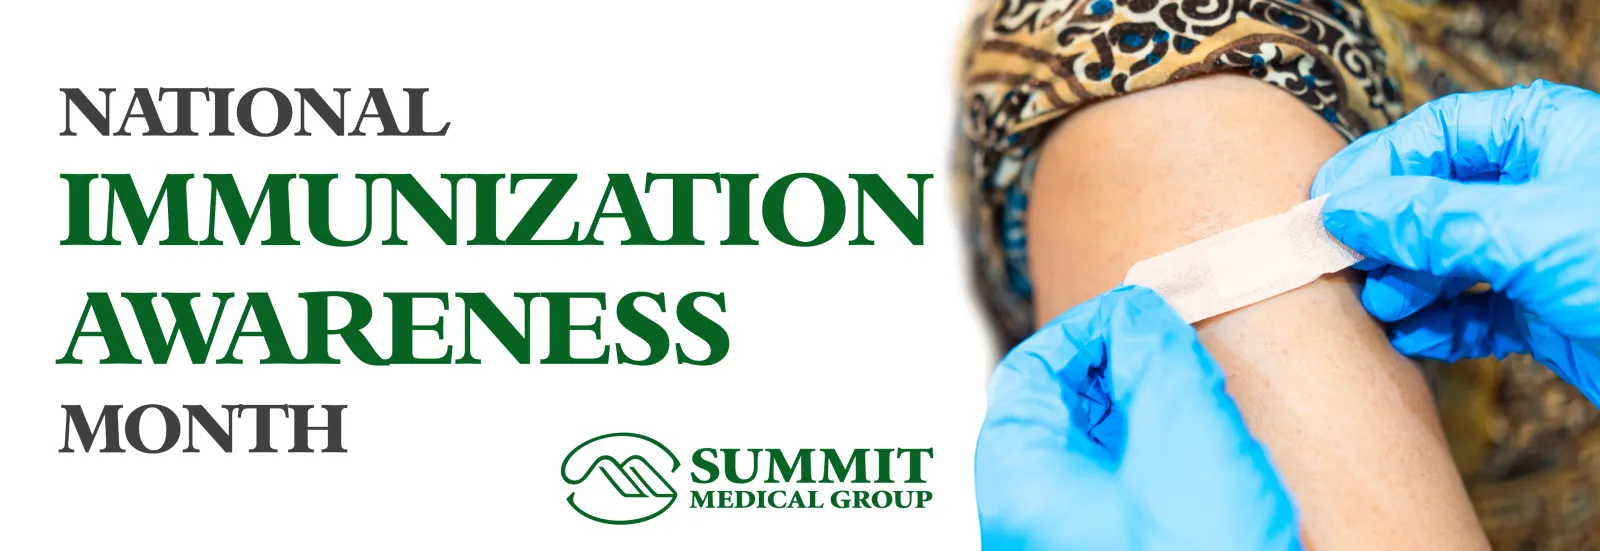 immunization awareness